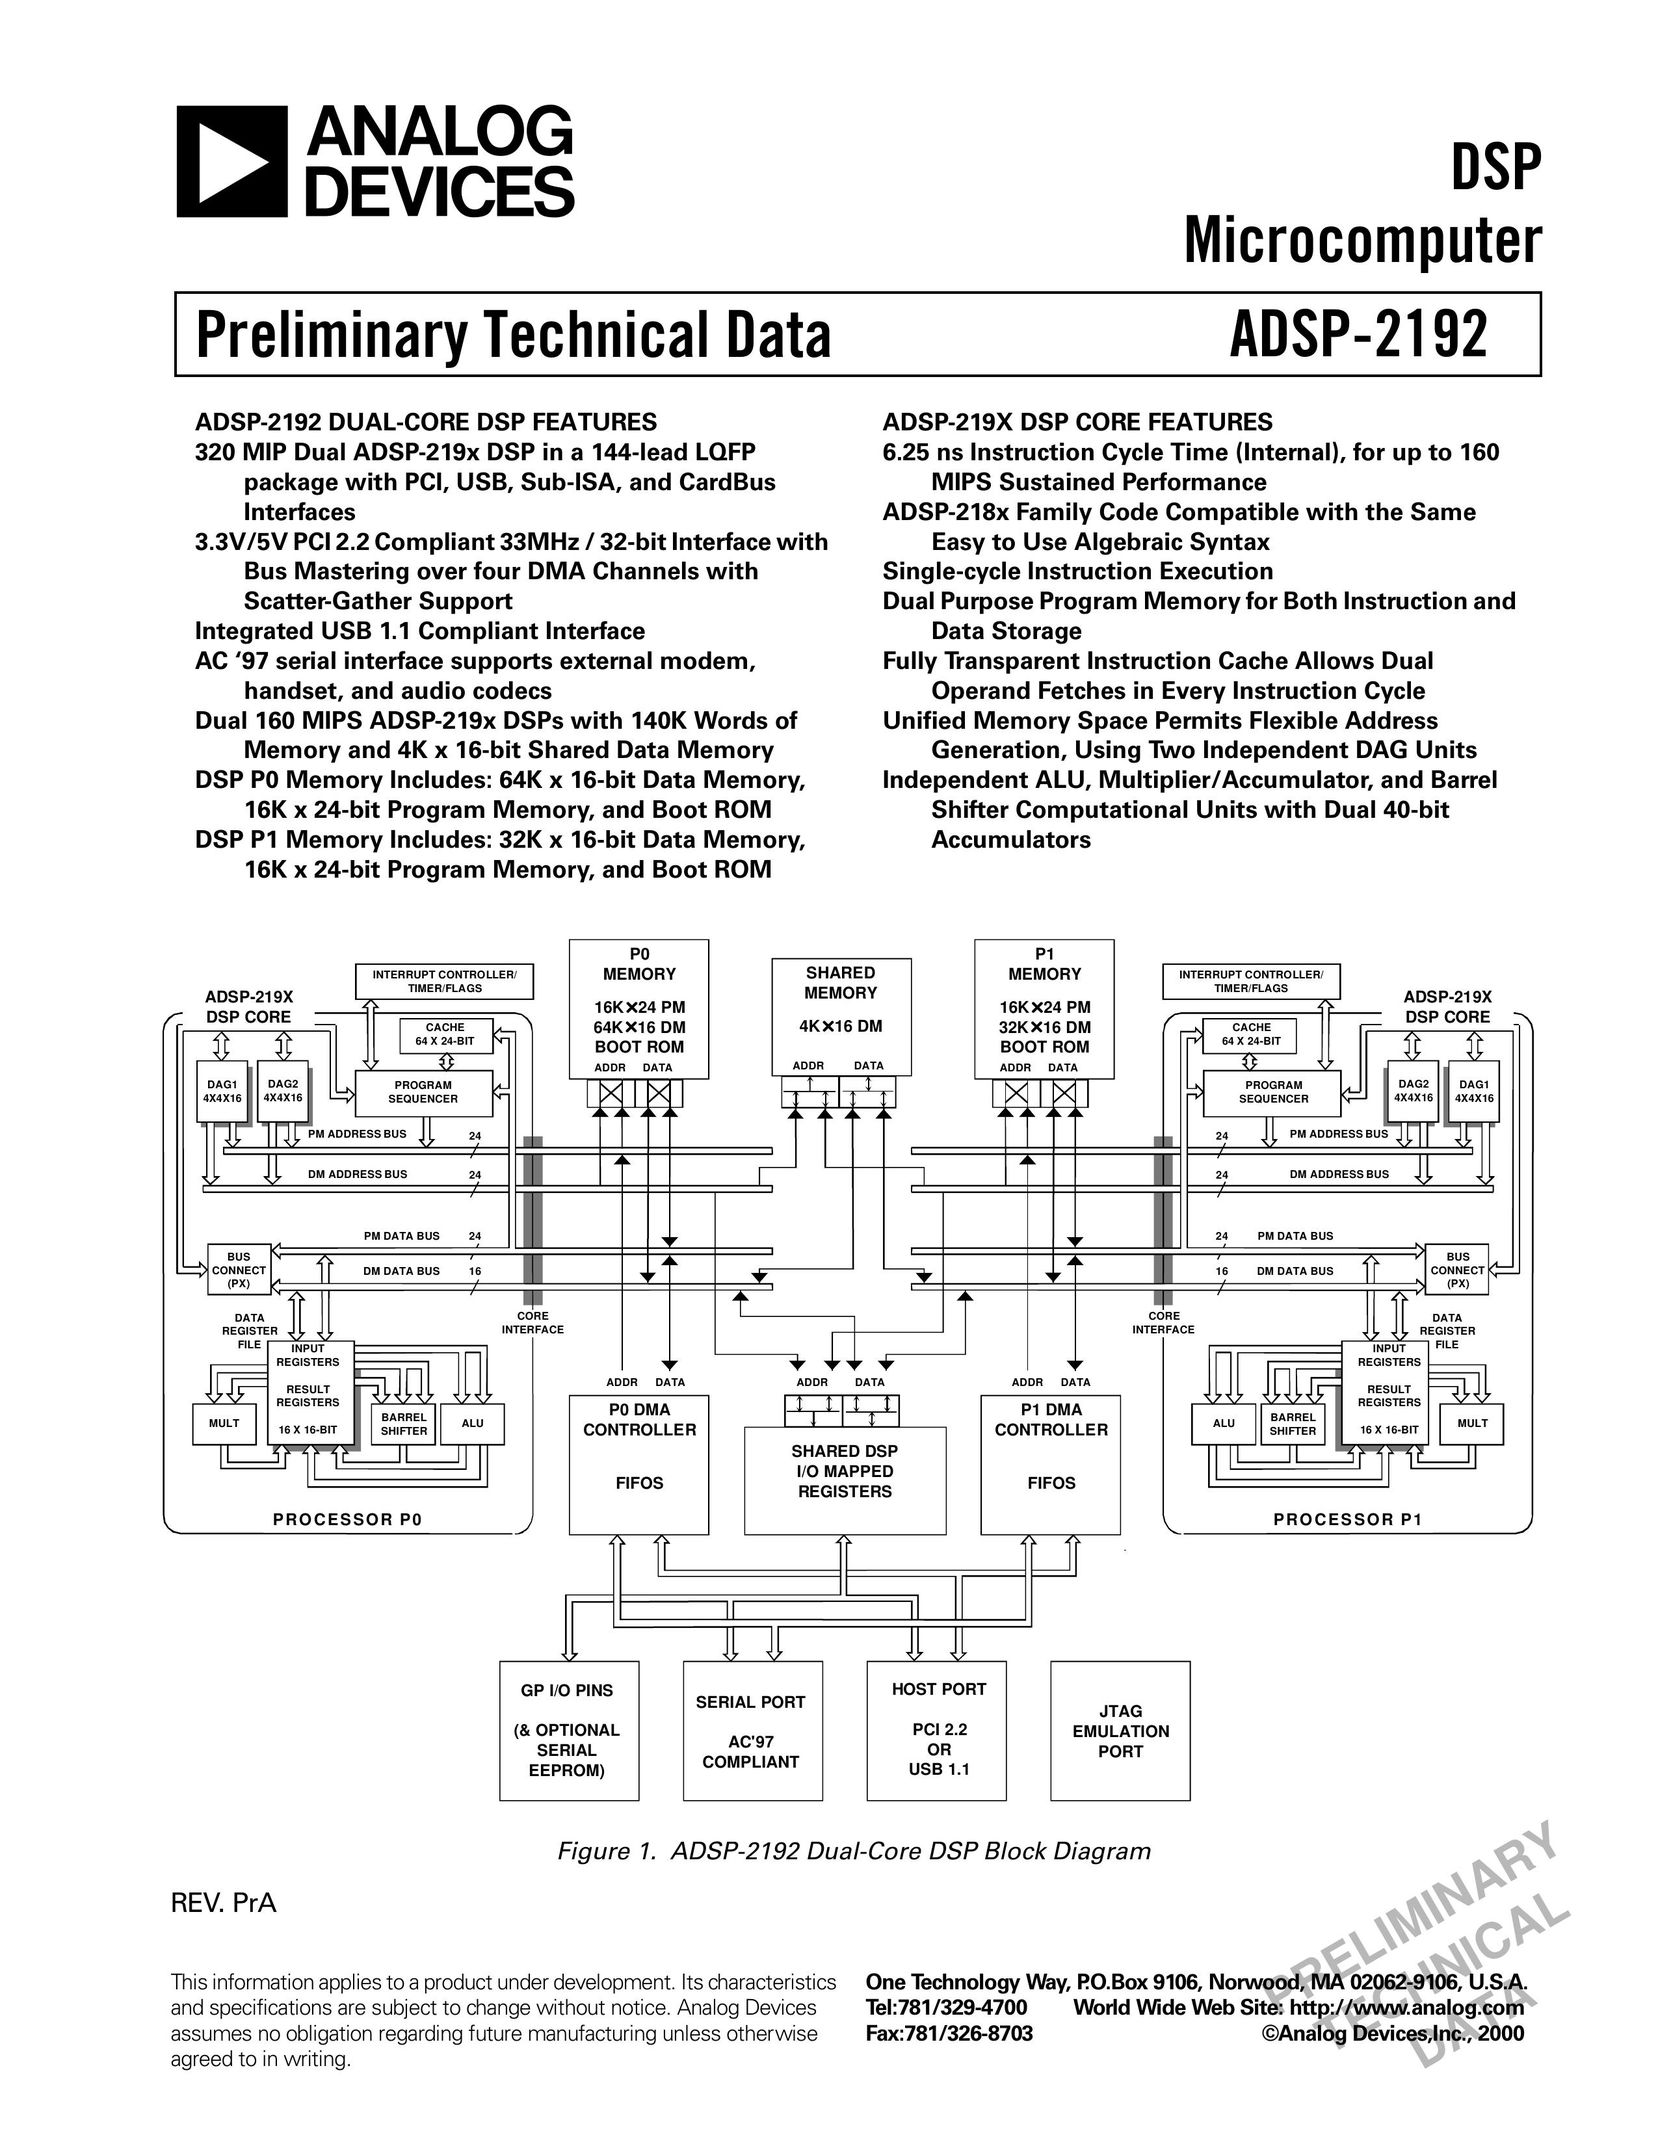 Analog Devices ADSP-2192 Laptop User Manual